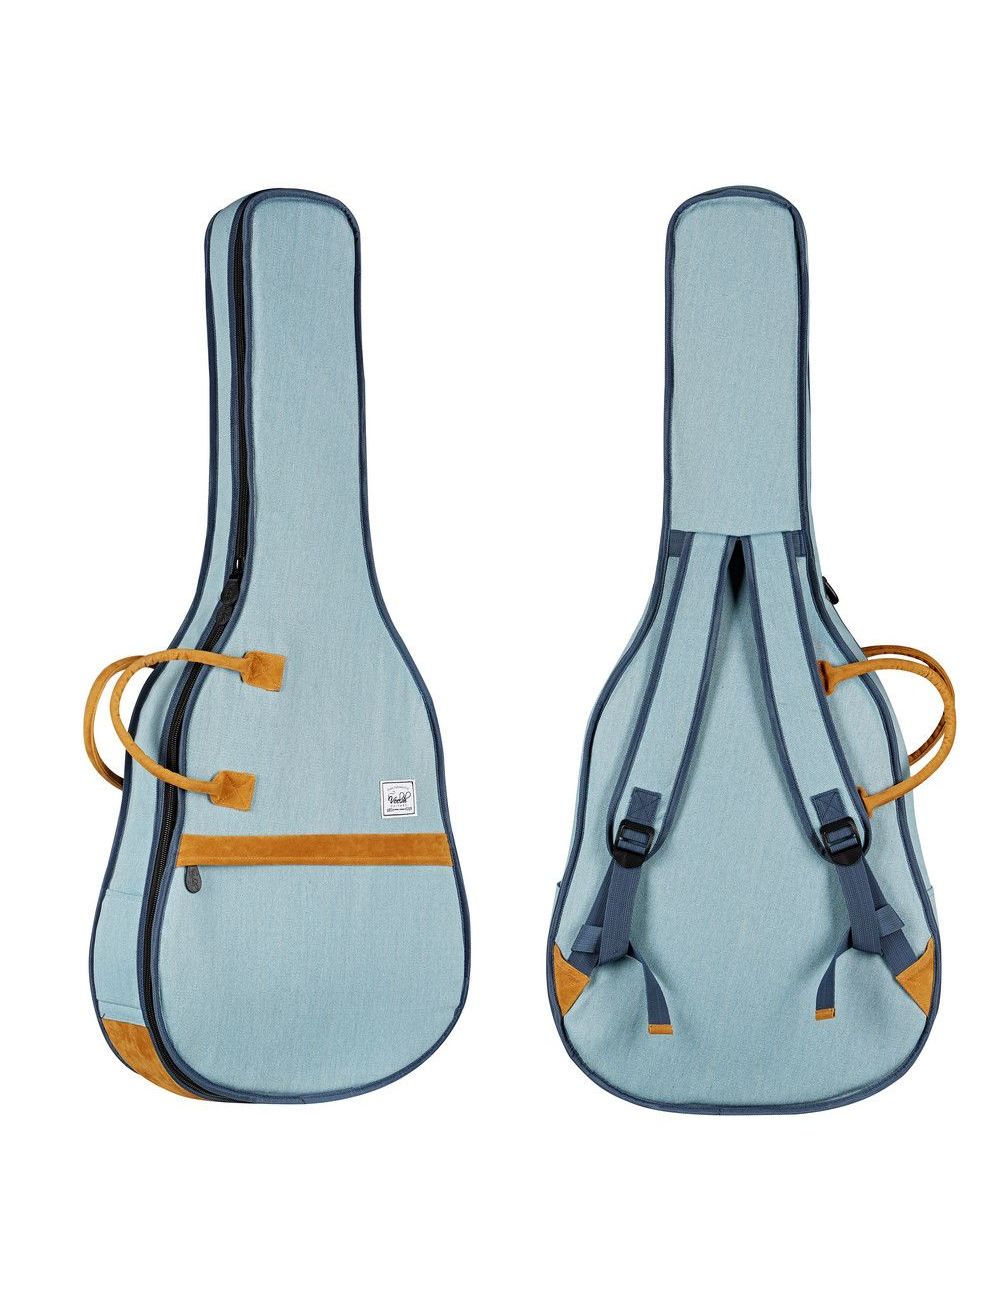 Veelah Teal AGB15-TE Acoustic guitar gig bag 1502456 Acoustic guitar